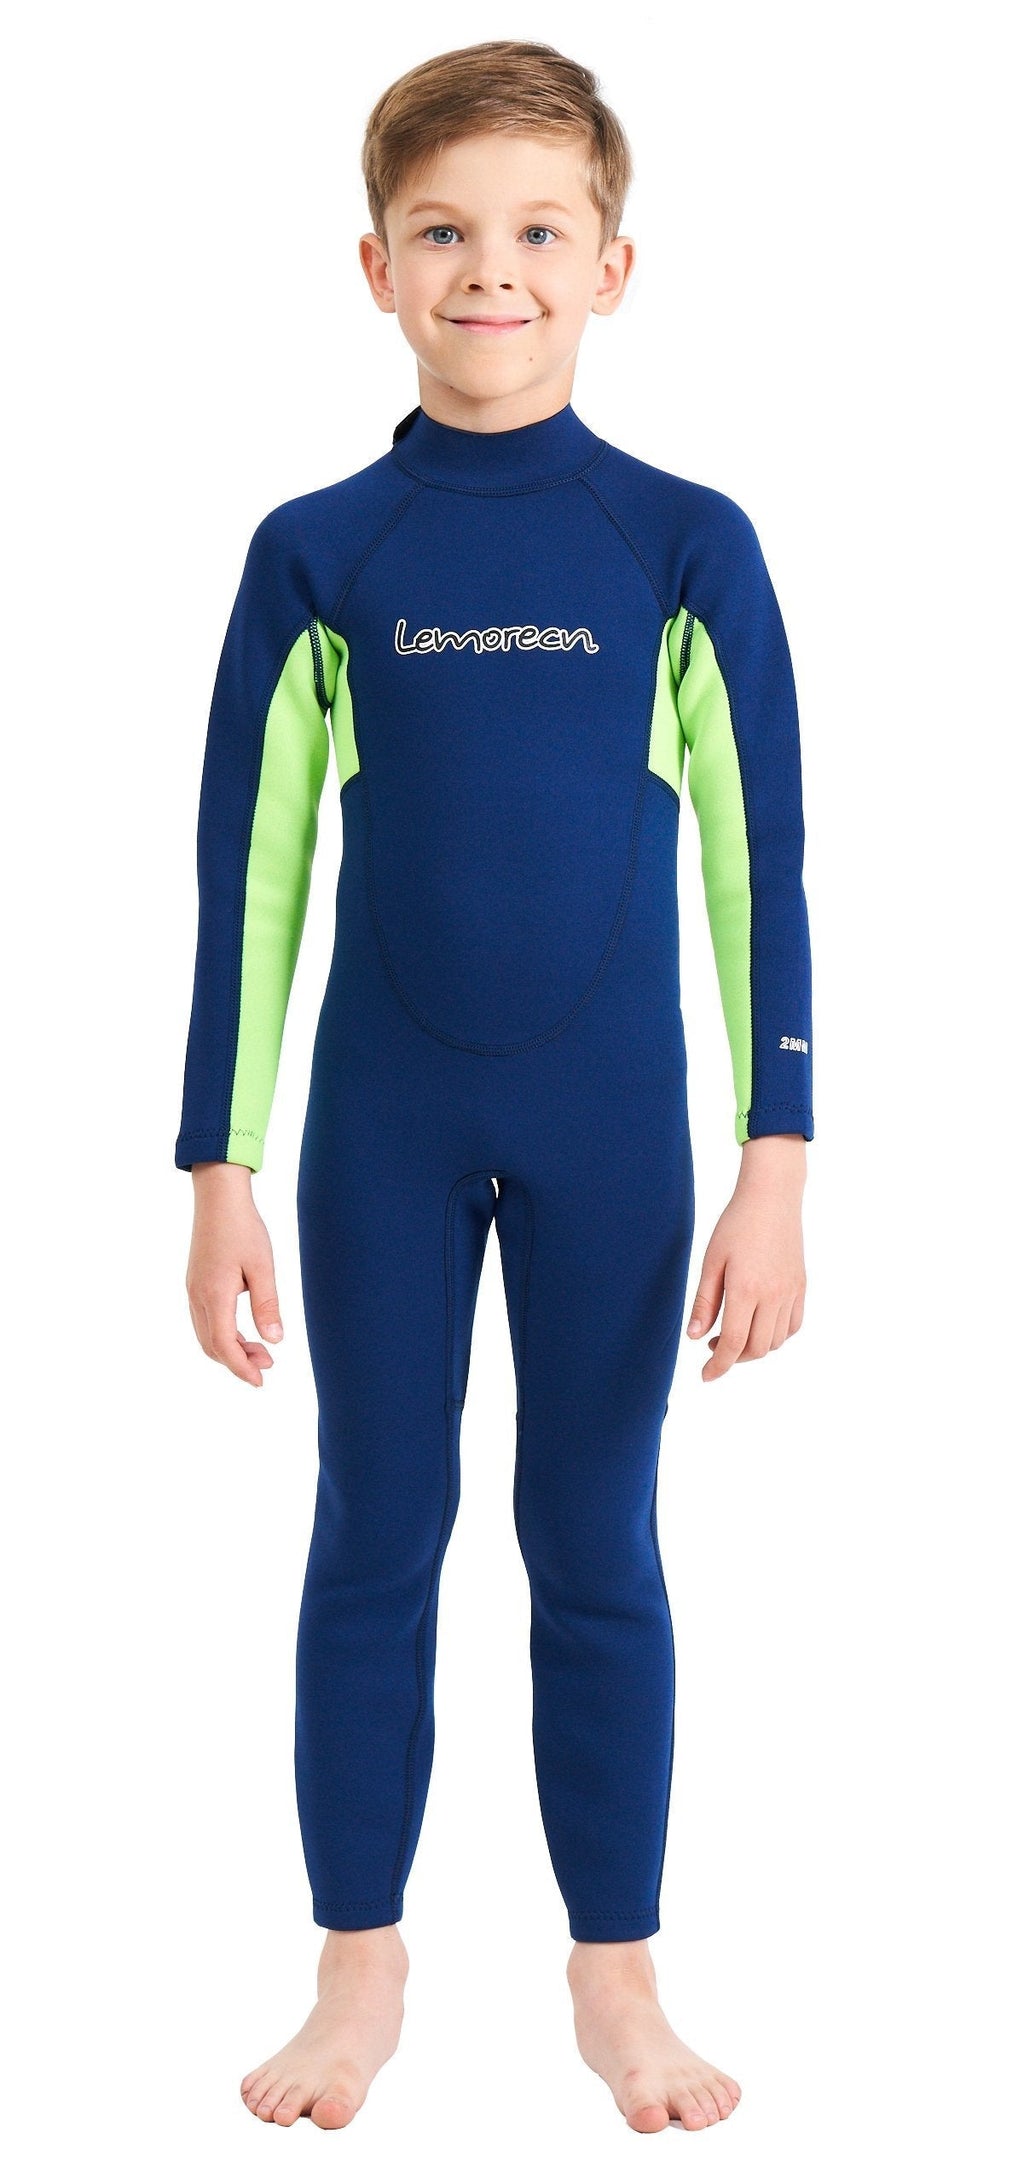 [AUSTRALIA] - Lemorecn Kids Wetsuits Youth Premium Neoprene 2mm Youth's Shorty Swim Suits Fullsuit Navy+Green 10 